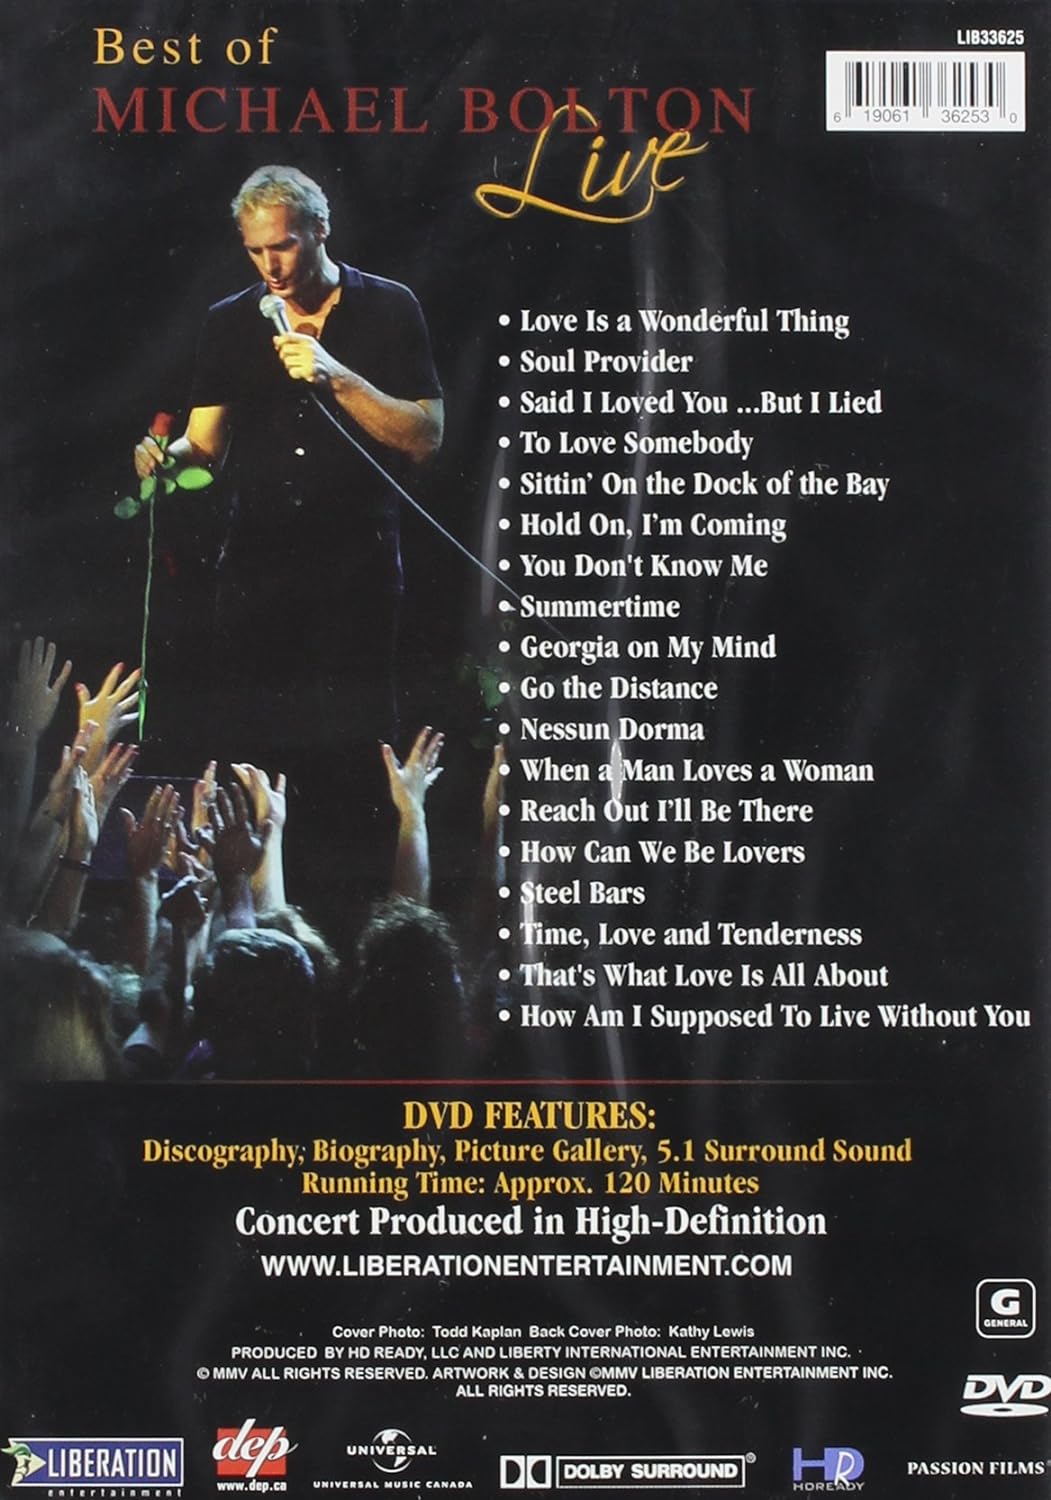 Best of Michael Bolton Live [DVD]